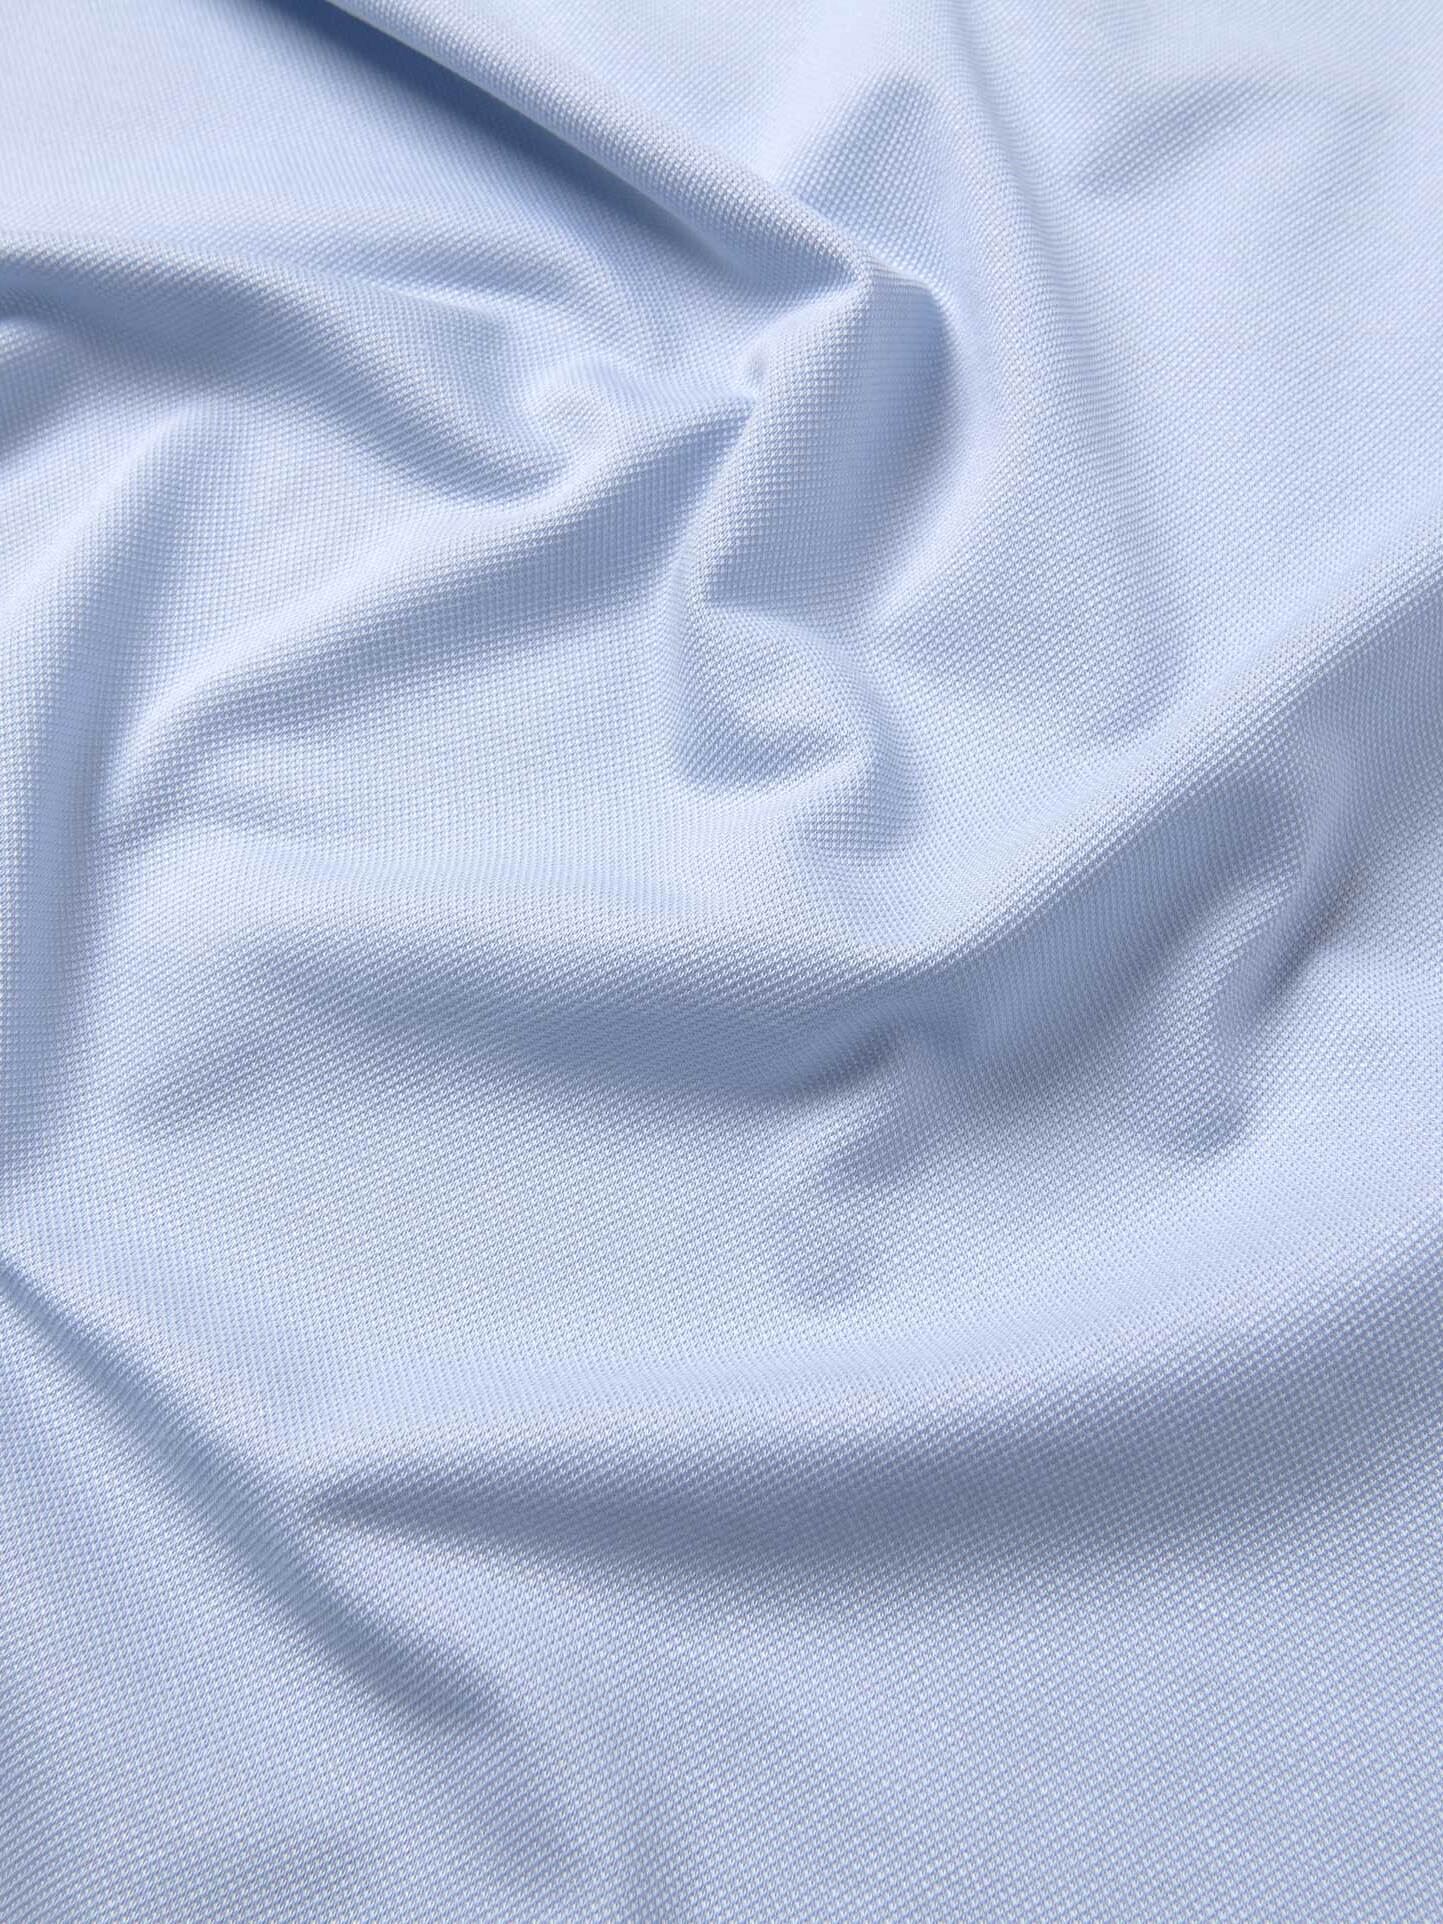 Japanese Light Blue Performance Knit Pique Shirts by Proper Cloth